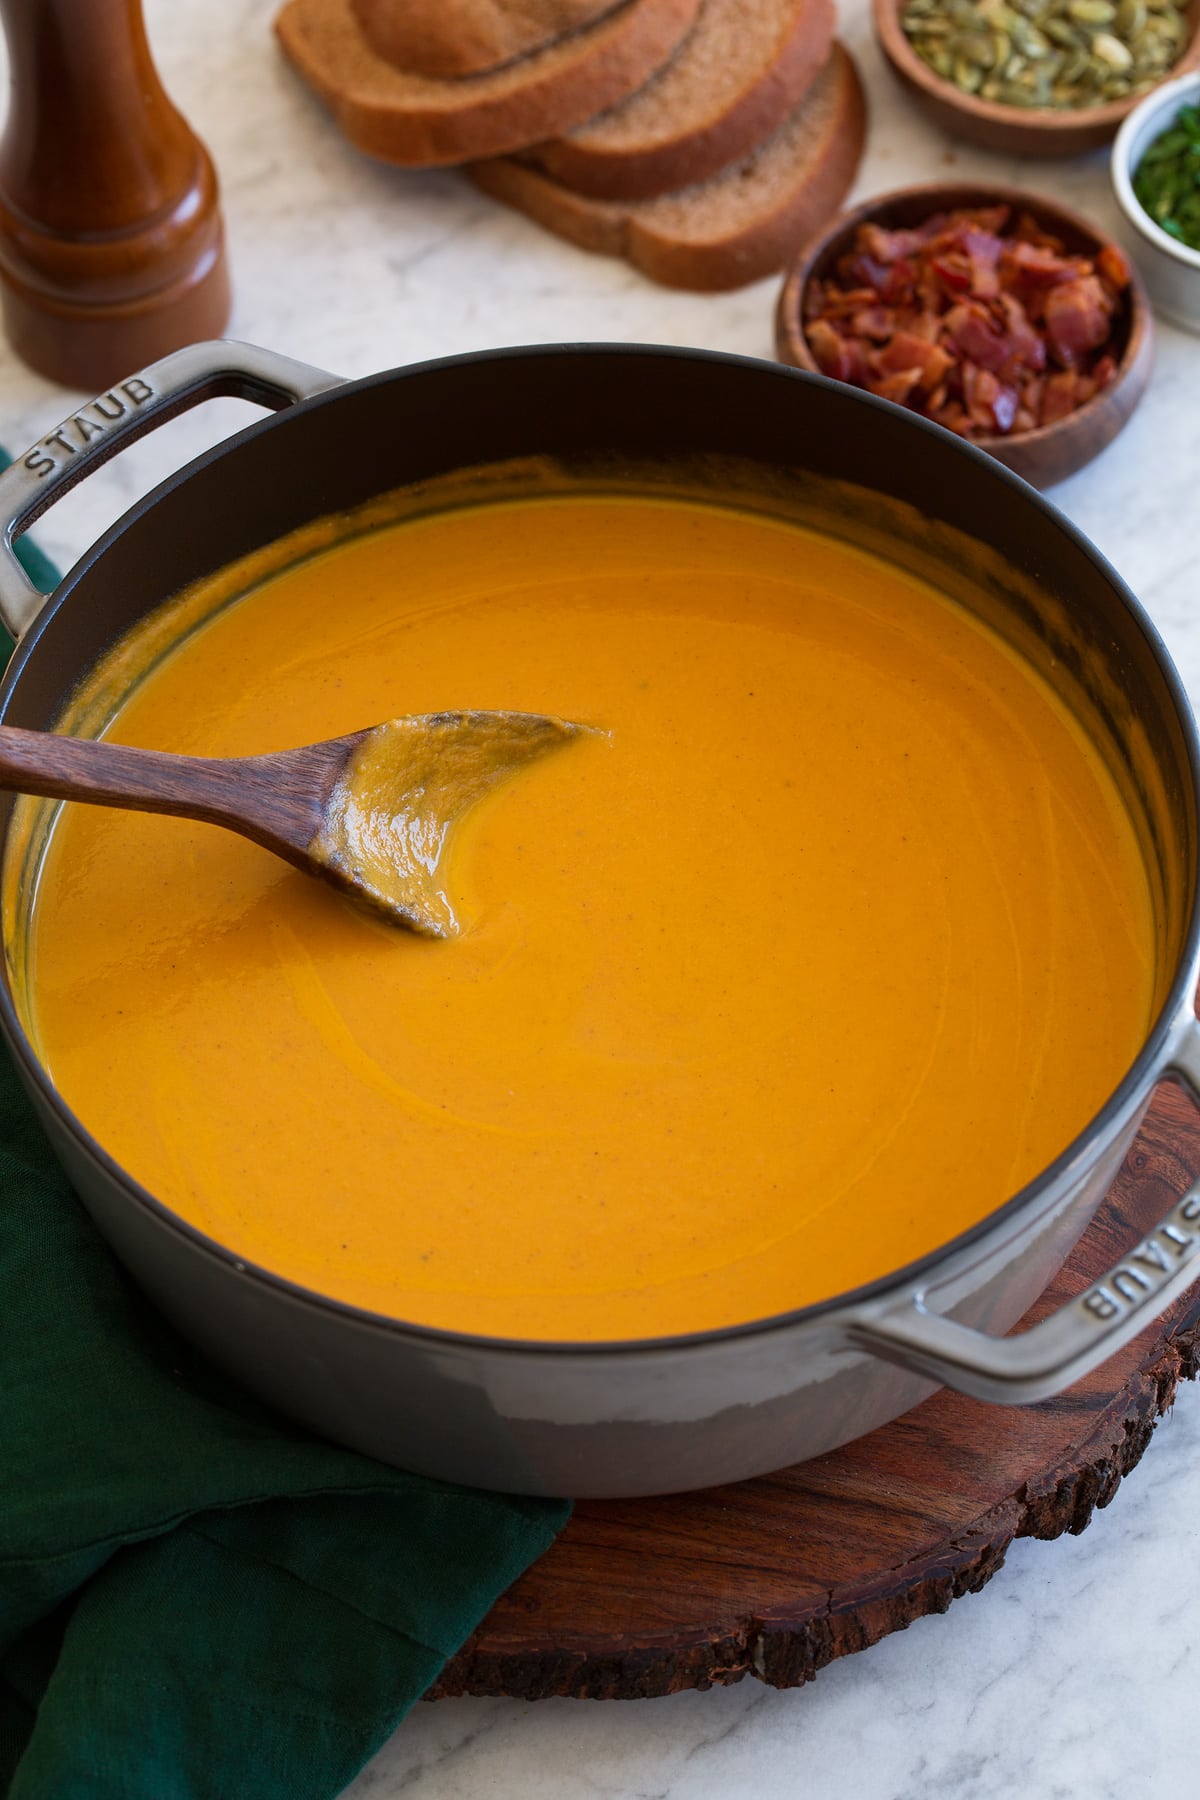 Pot of pumpkin soup with wooden ladle.